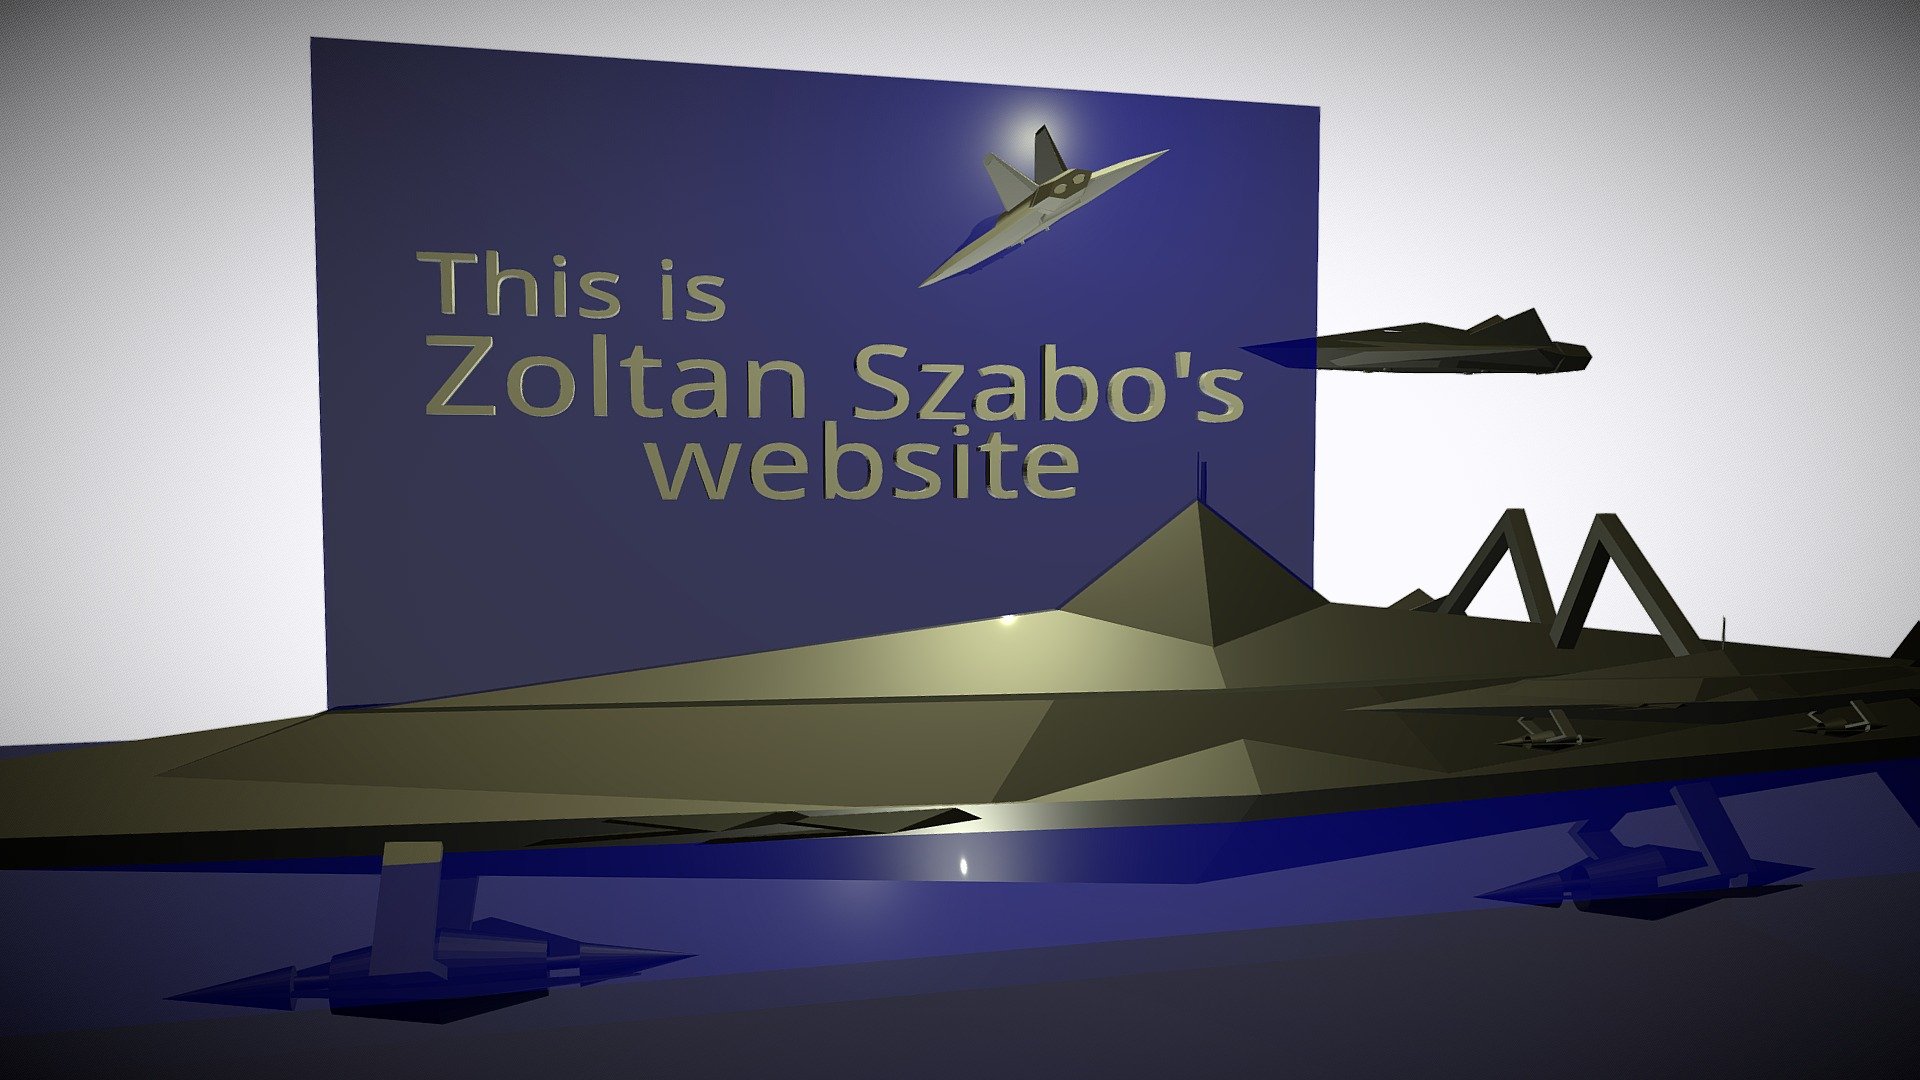 Zoltan Szabo's Website - Caption